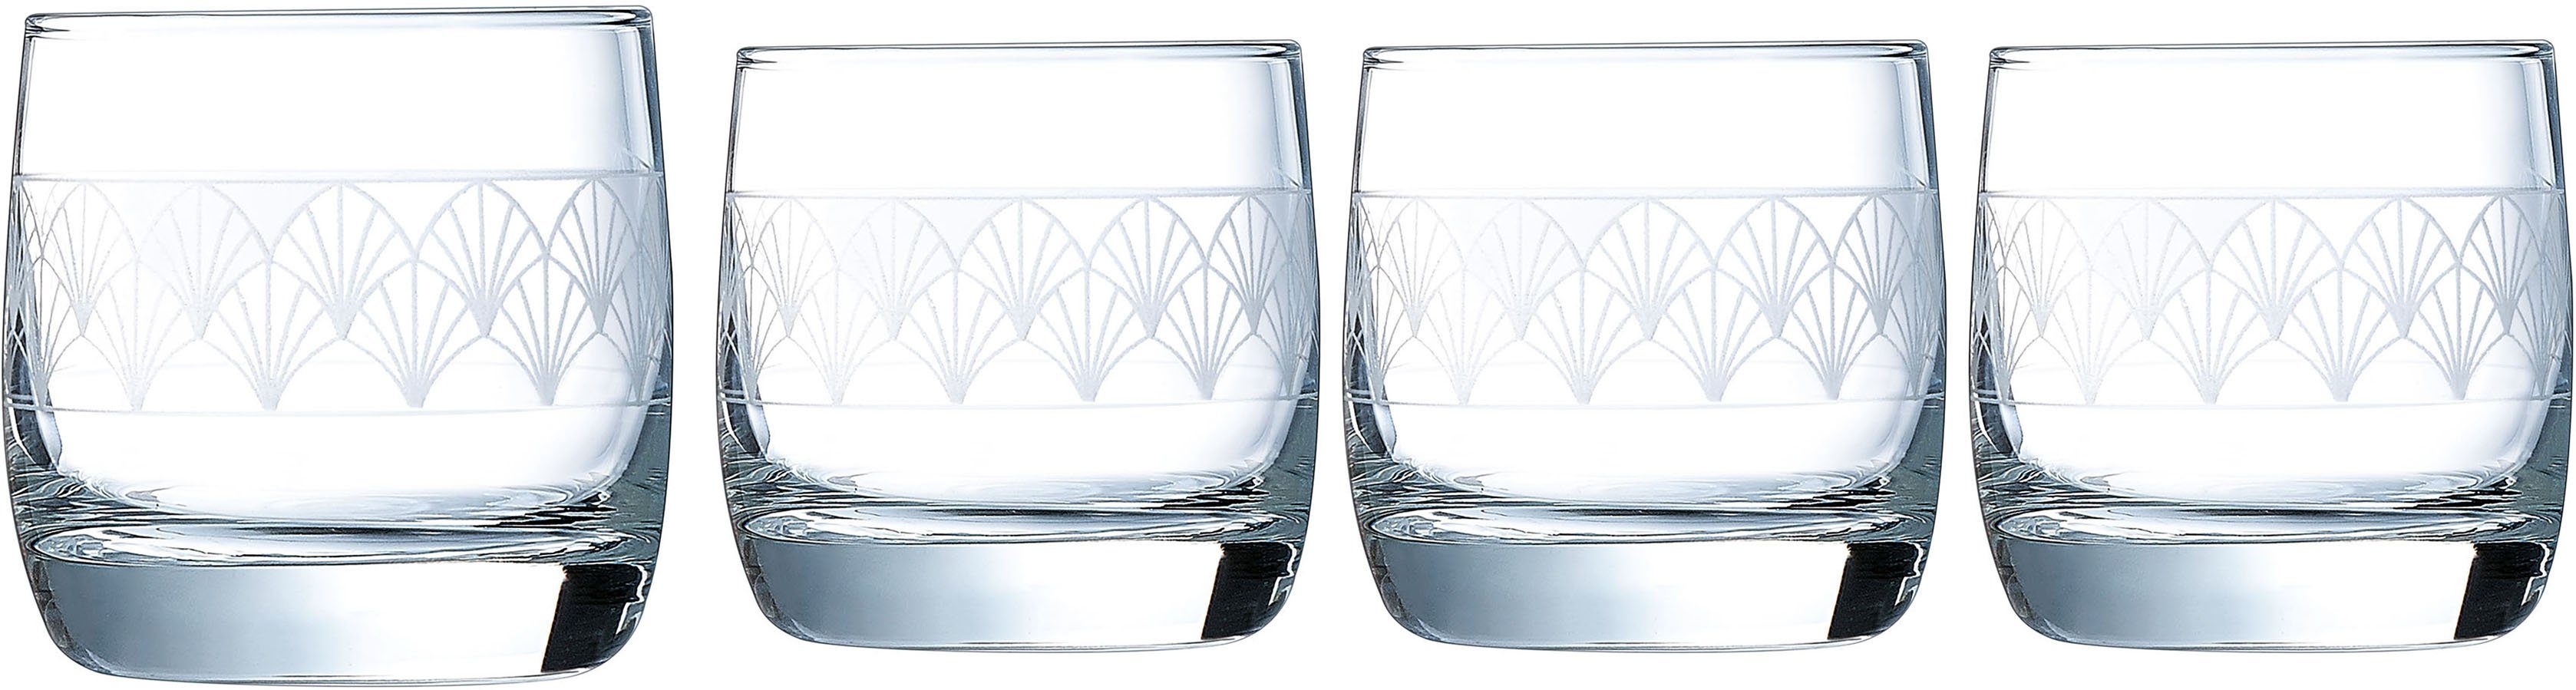 Luminarc Whiskyglas Trinkglas Paradisio, Glas, Скло Set, mit Pantographie-Optik, 4-teilig, Made in Europe